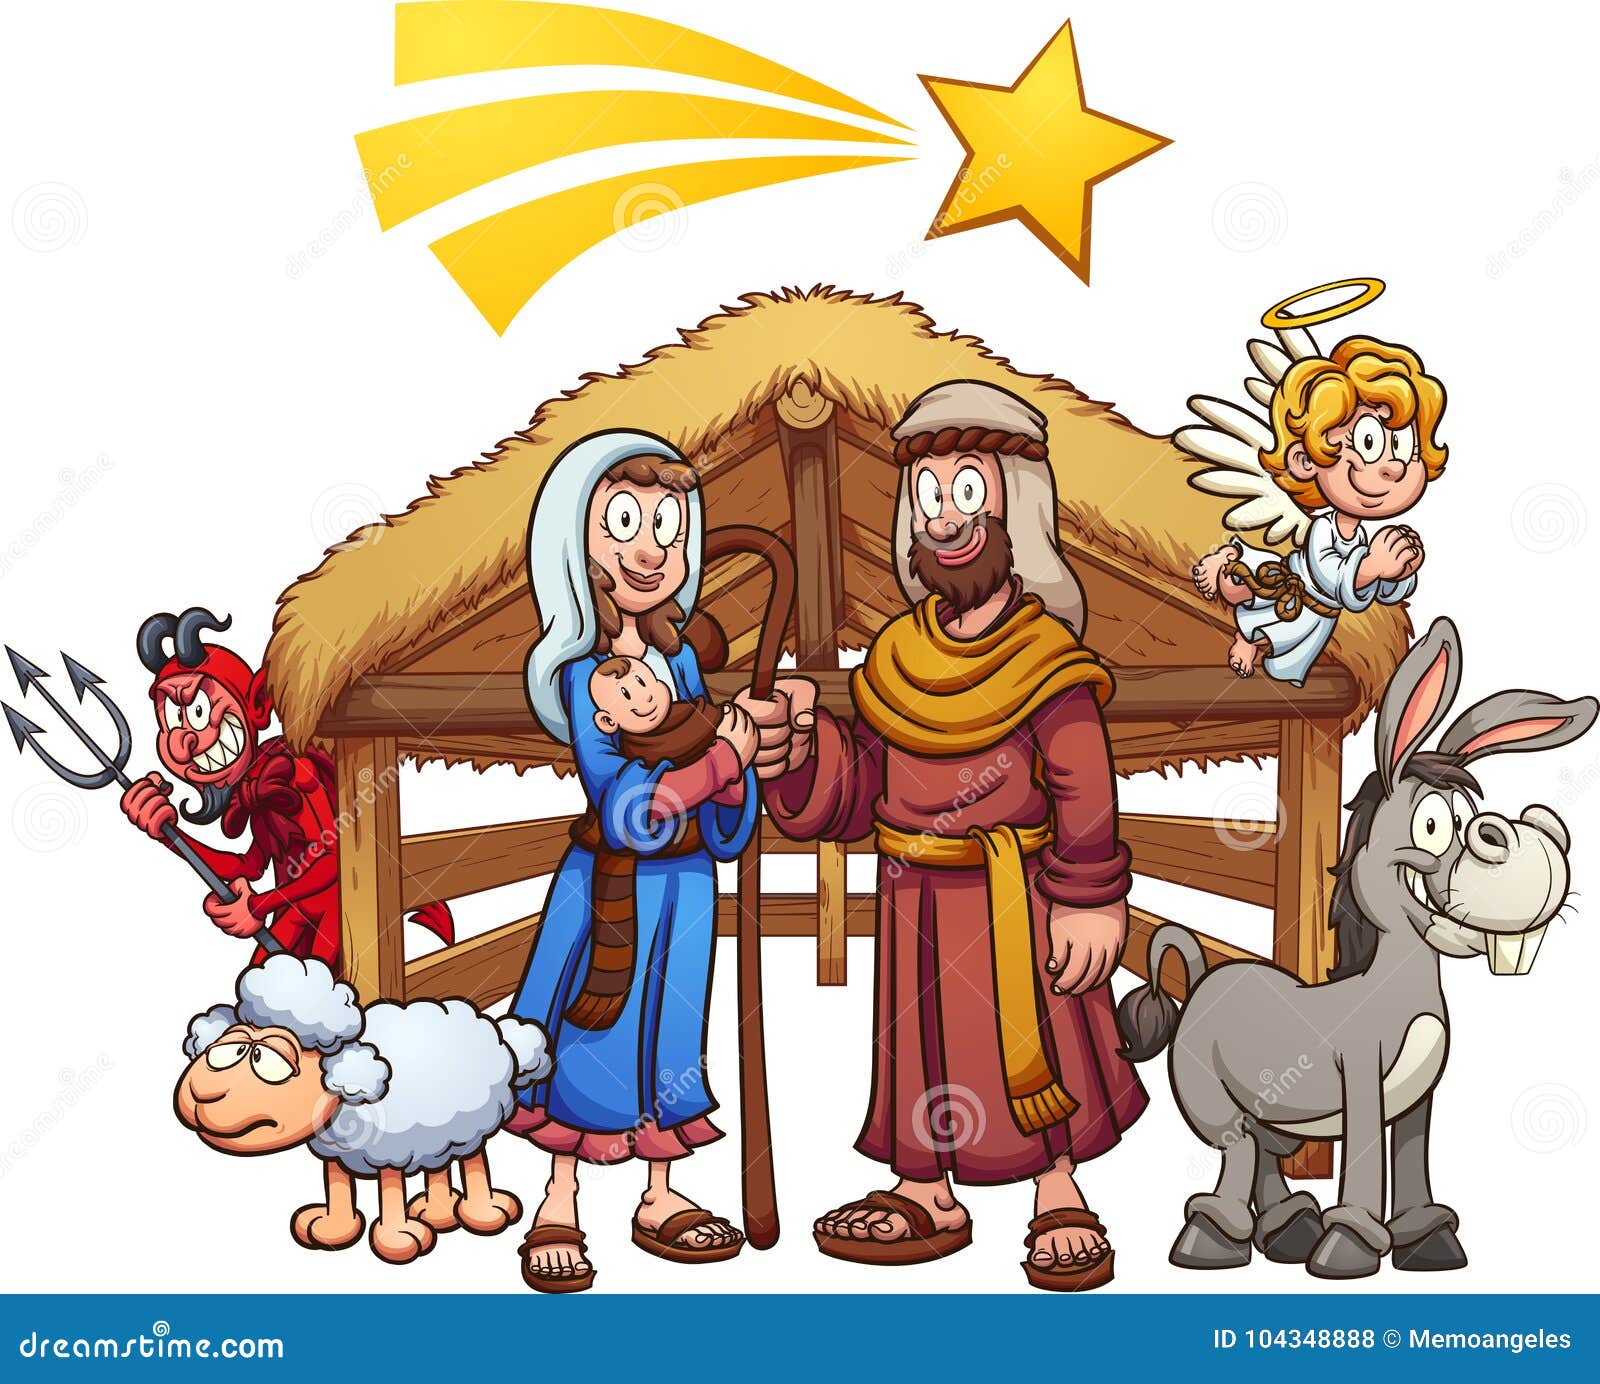 Featured image of post Manger Nativity Scene Cartoon Jesus born in a manger cartoon graphic vector